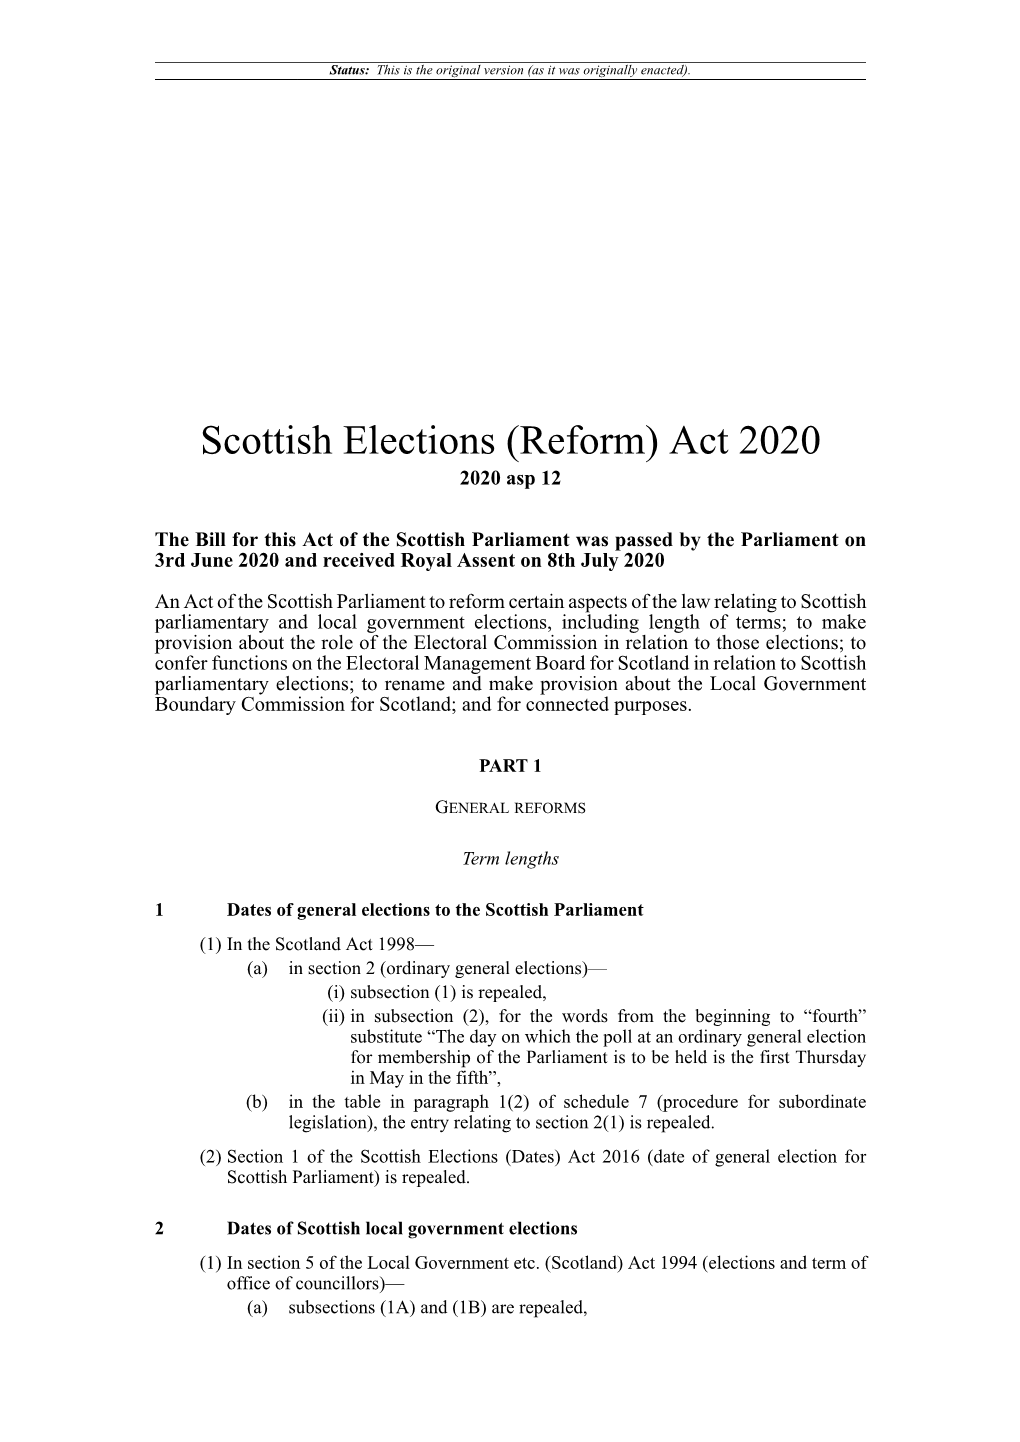 Scottish Elections (Reform) Act 2020 2020 Asp 12